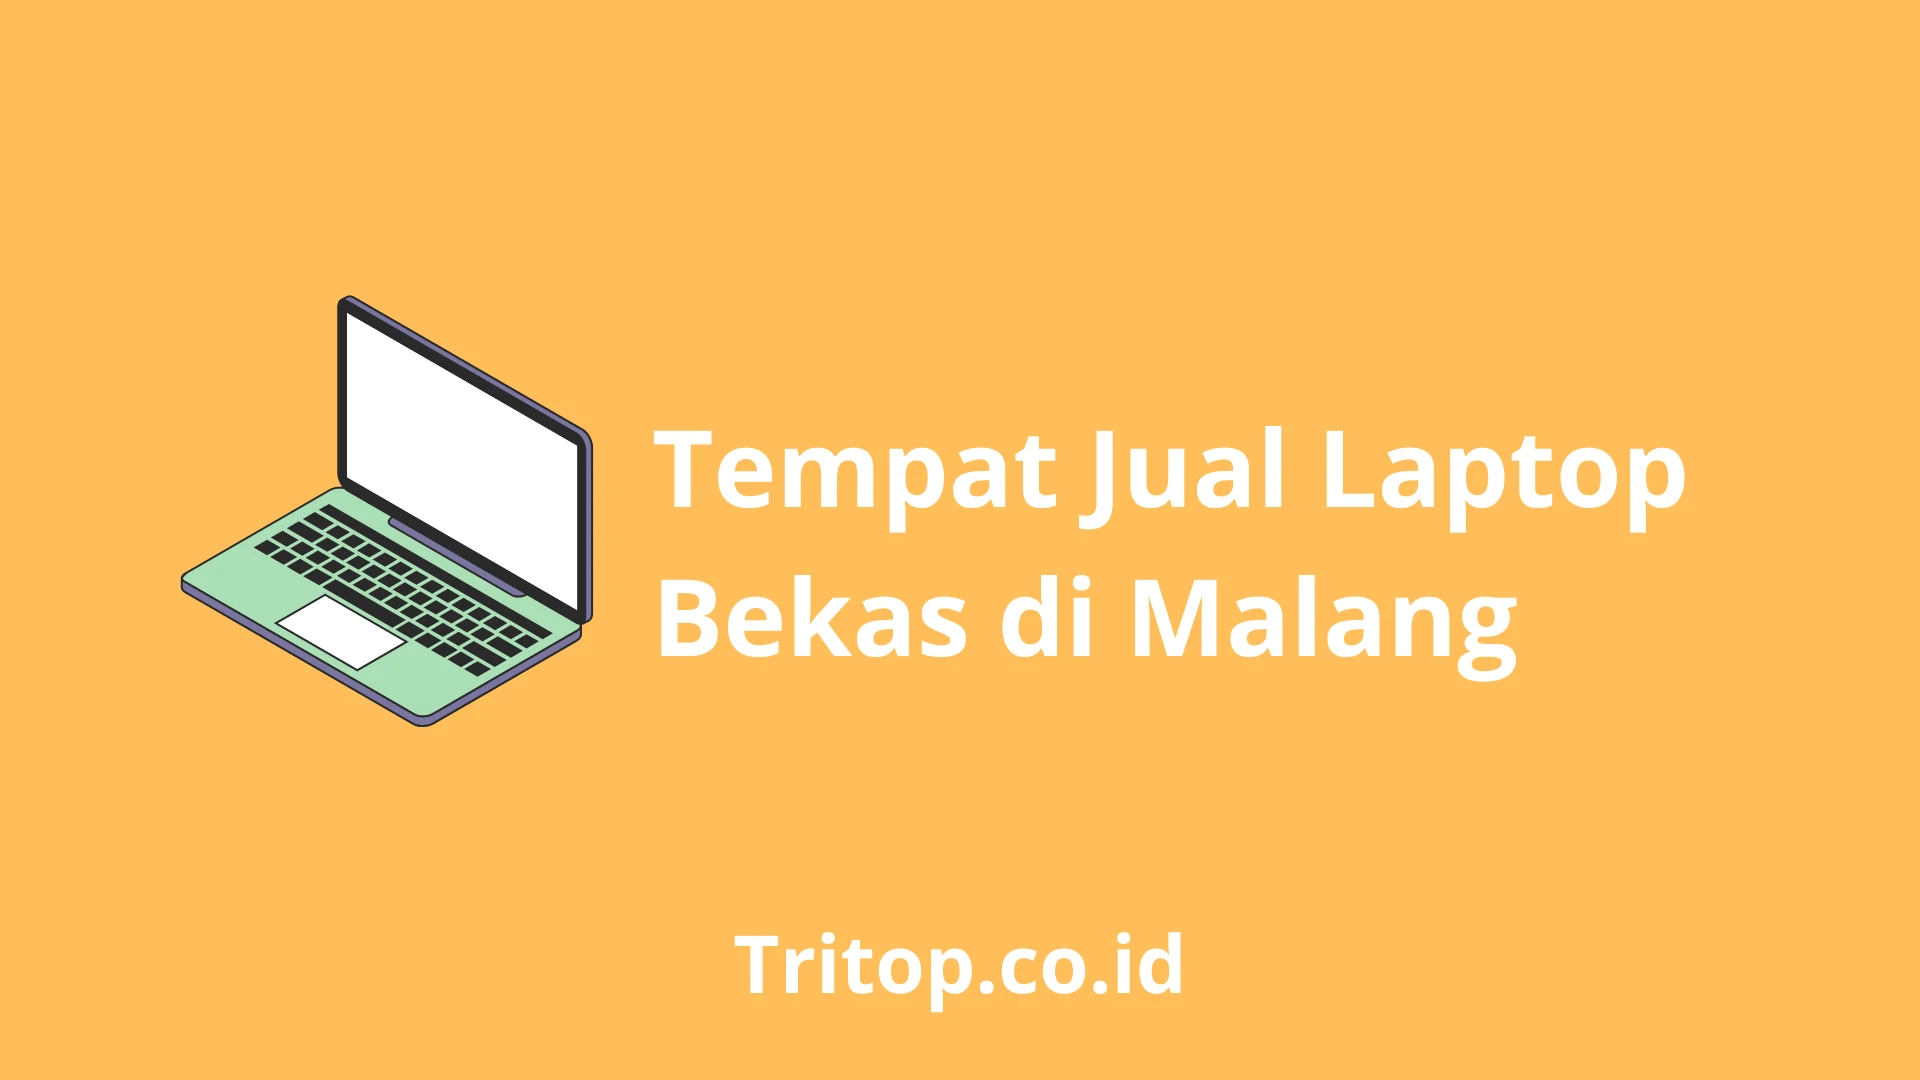 Tempat Jual Laptop Bekas di Malang tritop.co.id